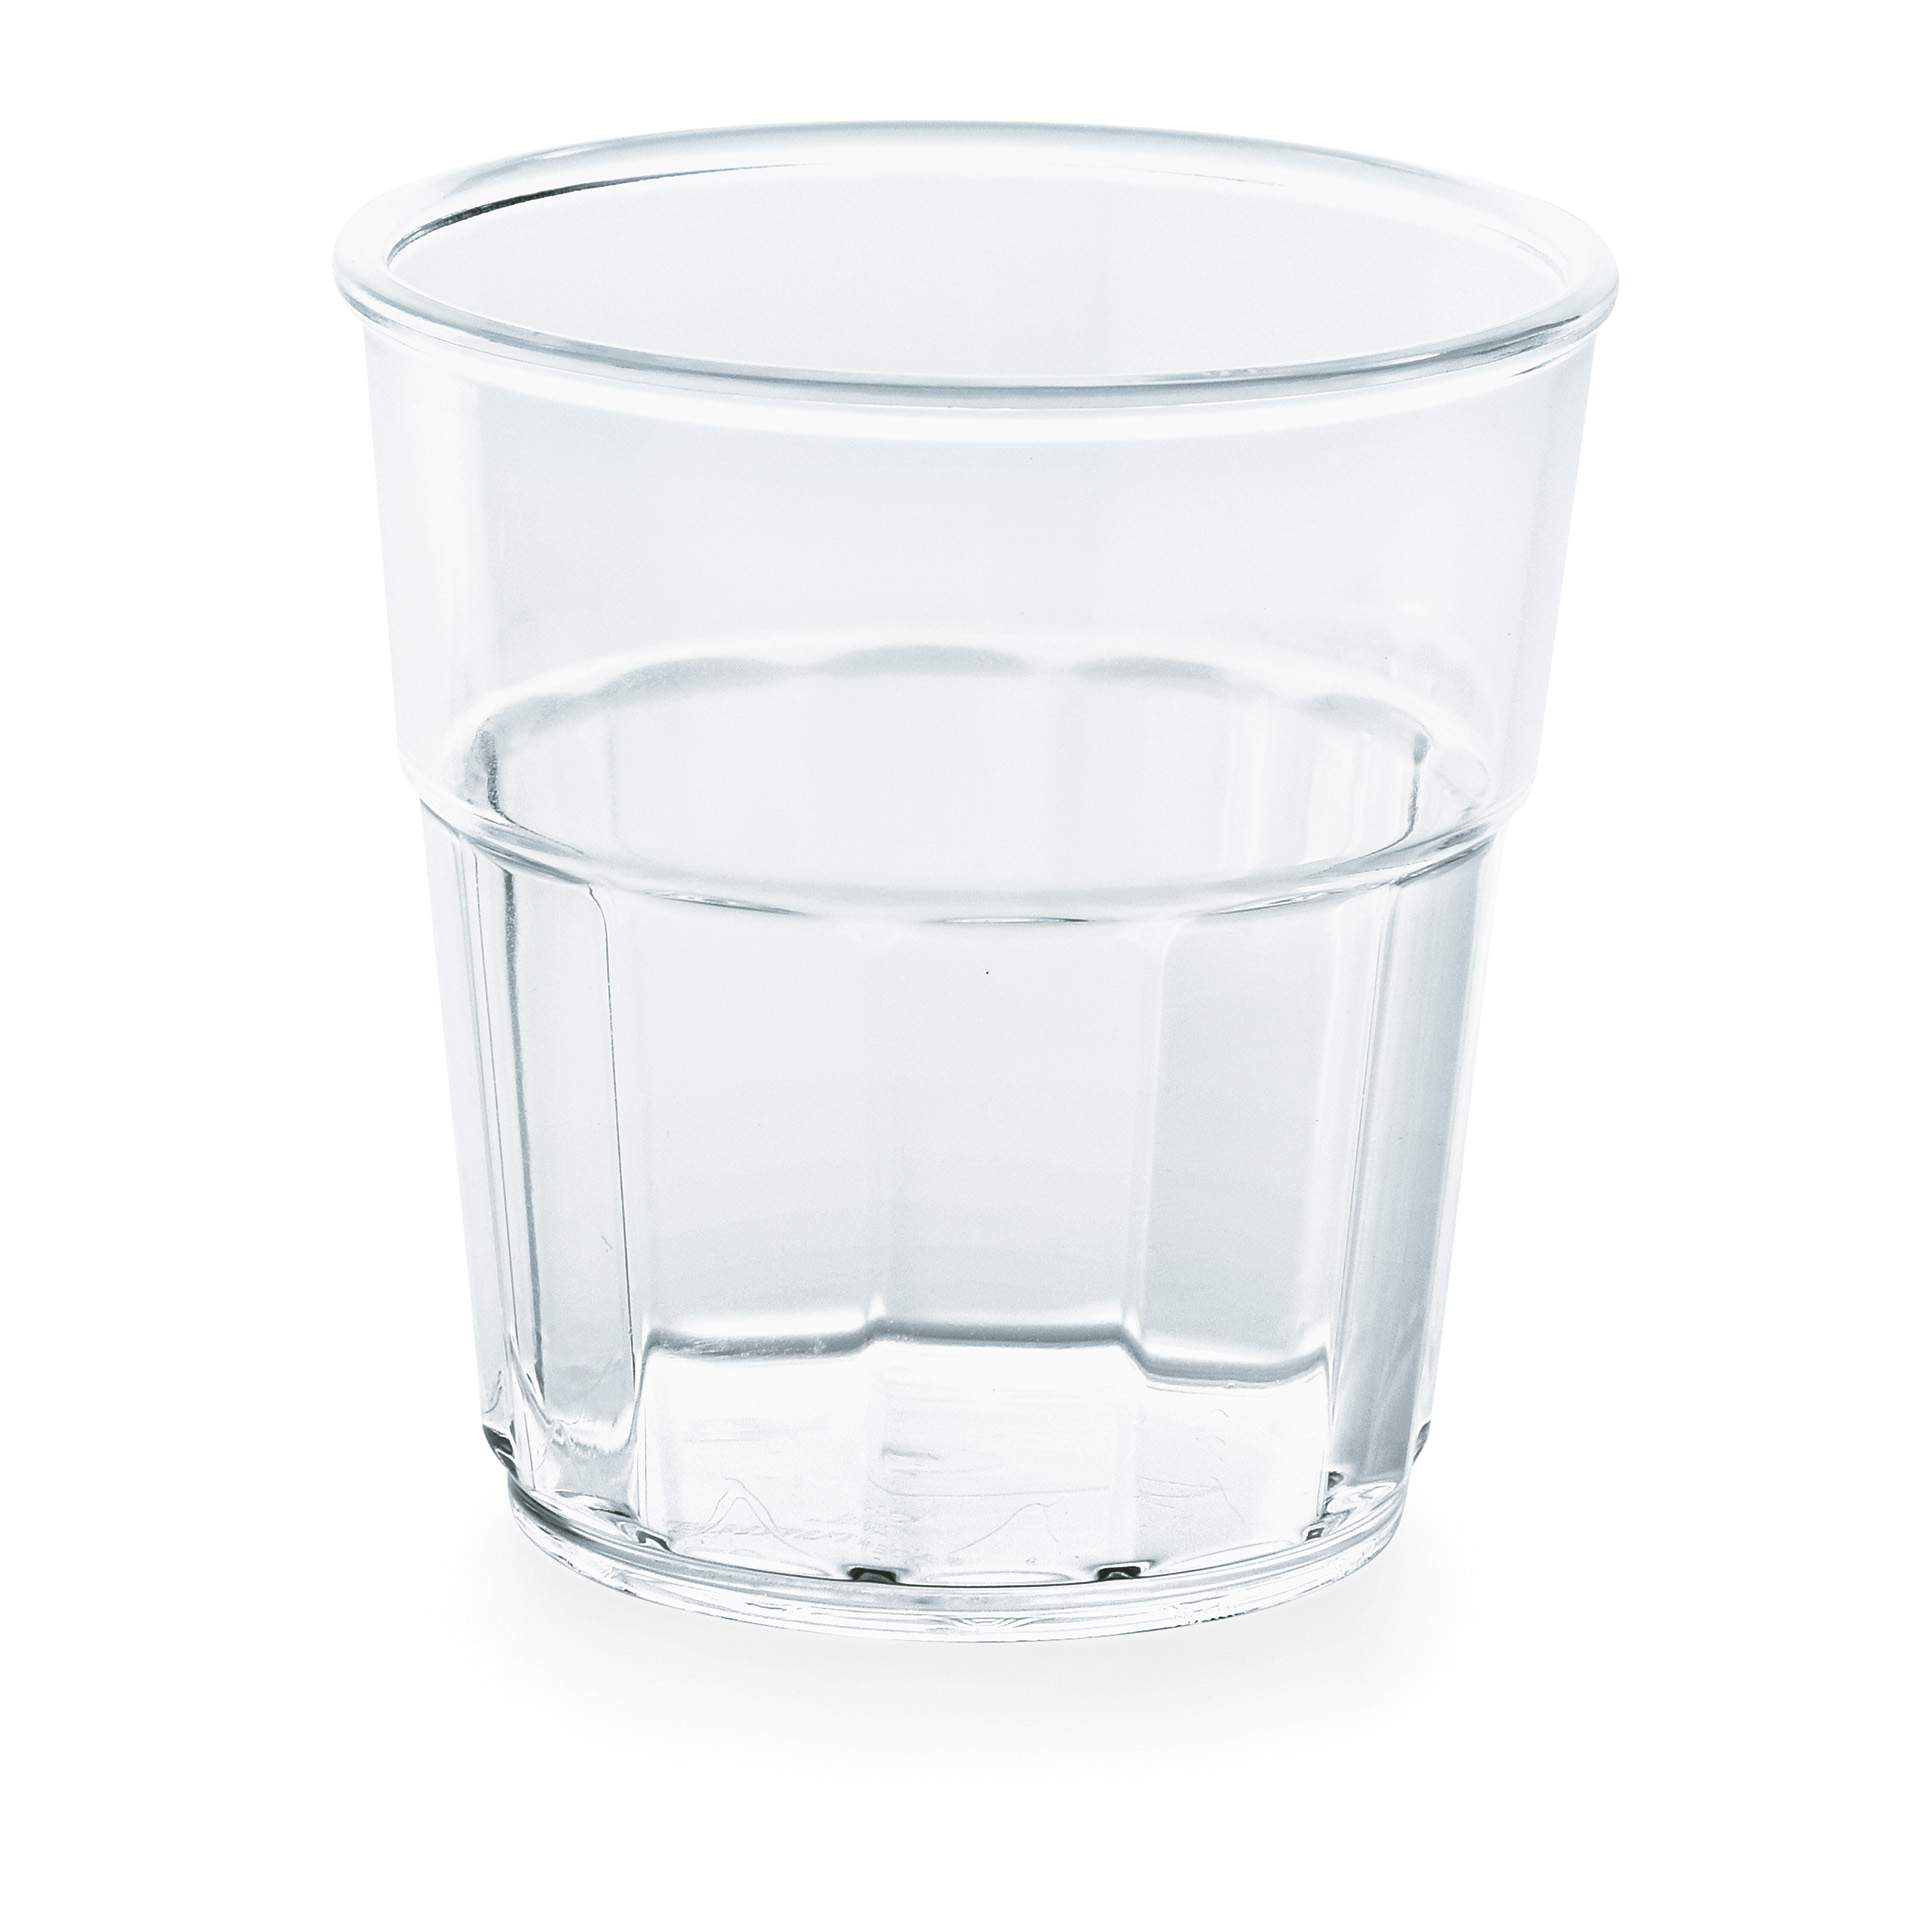 Trinkglas - Abm. 8,2 x 9,7 cm - Inhalt 0,30 l - Polycarbonat - 9457030-A